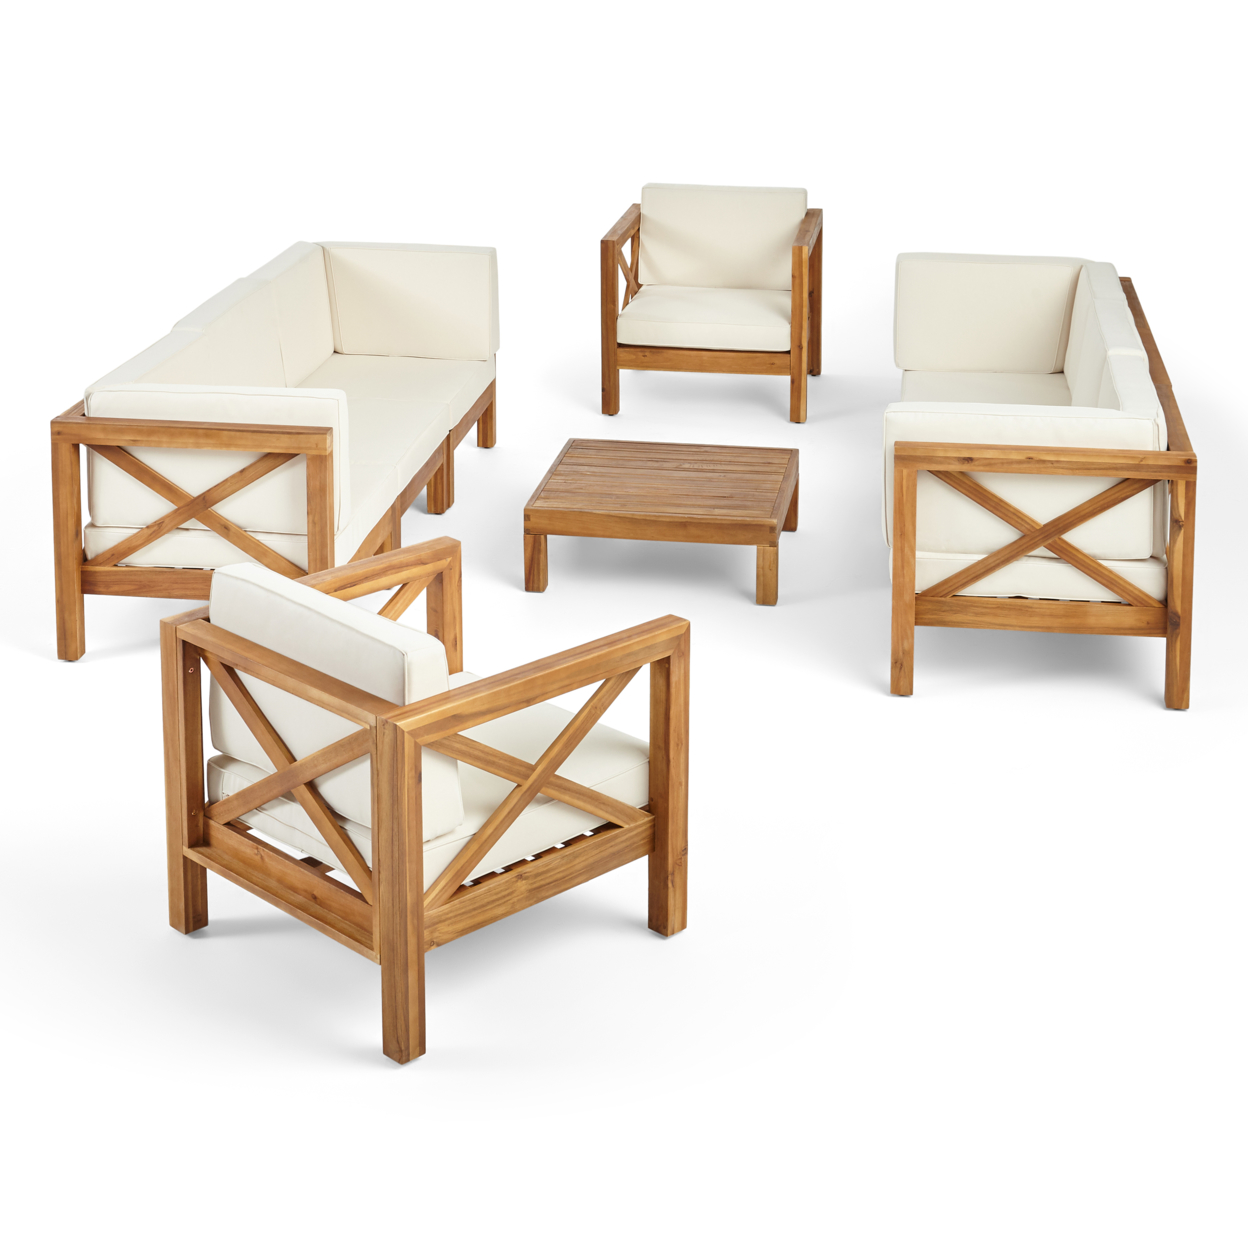 Morgan Outdoor 8 Seater Acacia Wood Sofa And Club Chair Set - Teak Finish + Beige